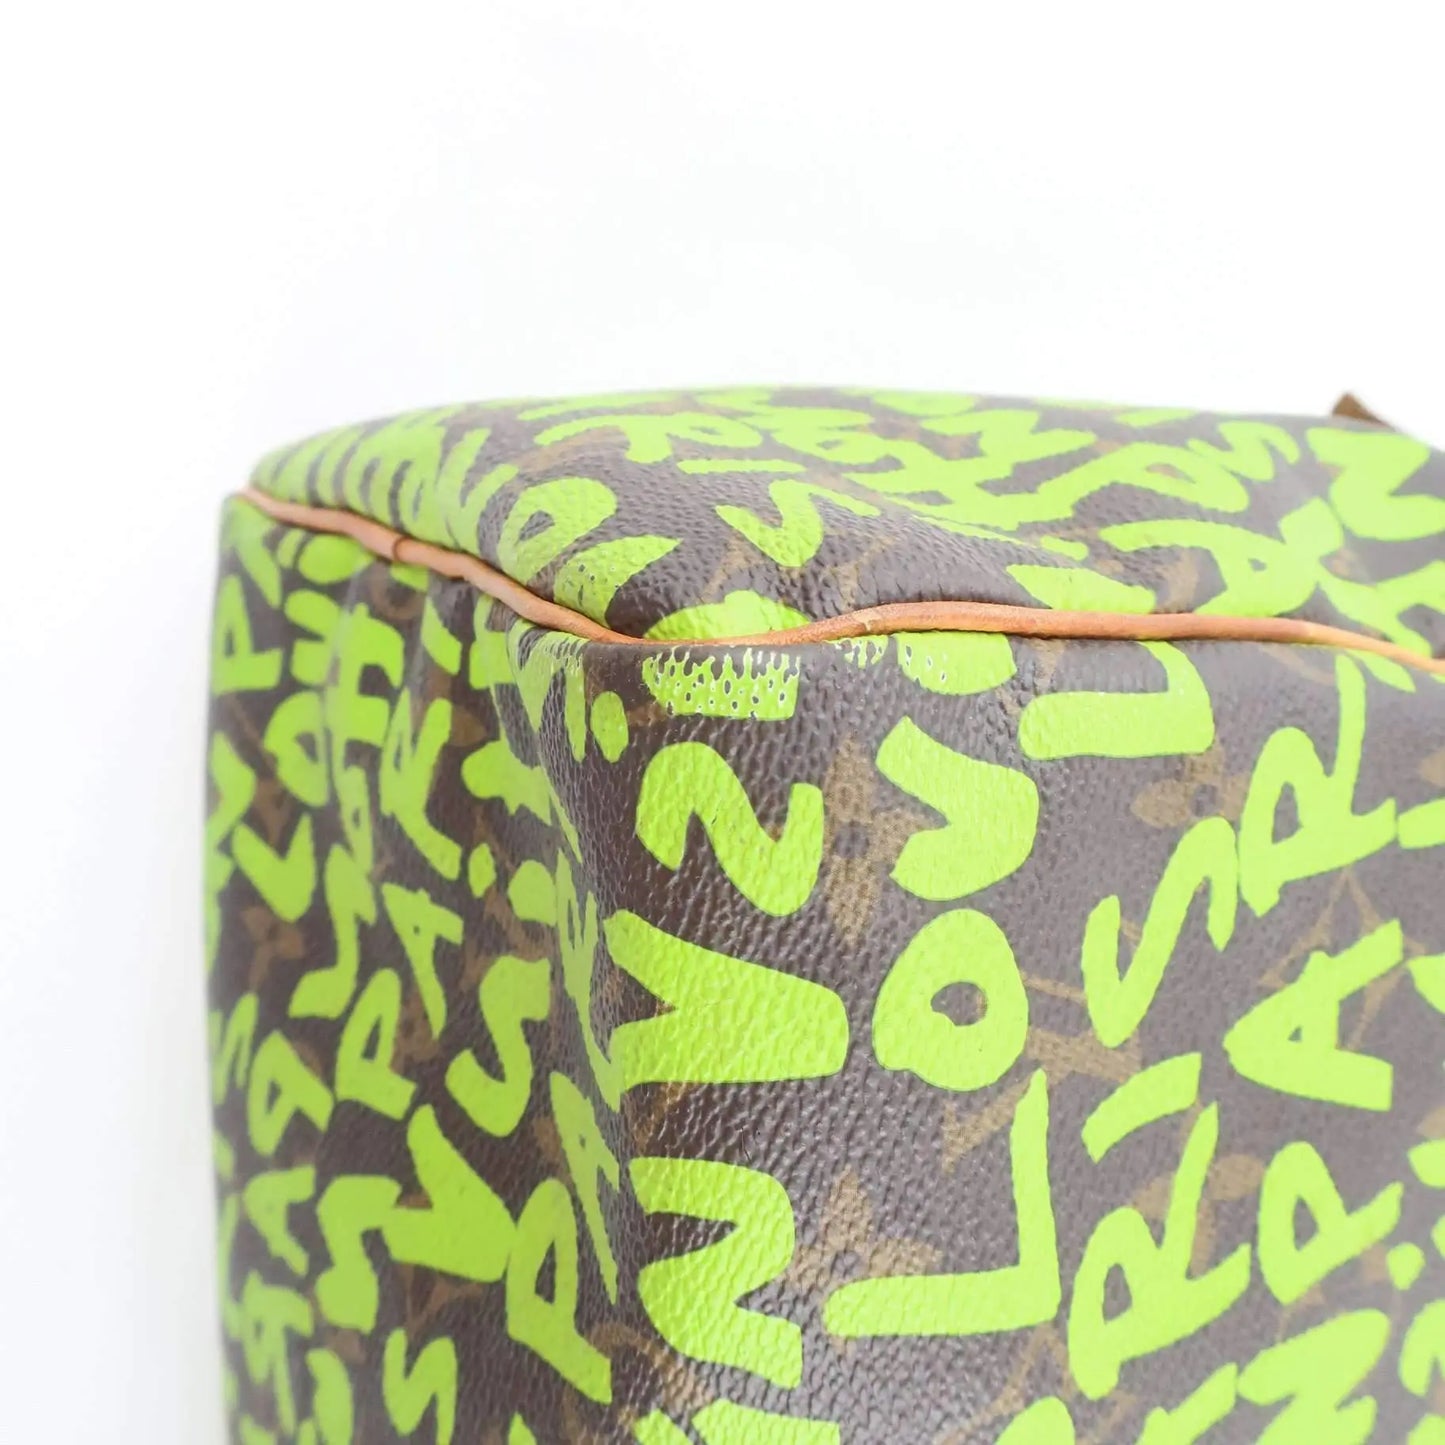 Load image into Gallery viewer, Louis Vuitton Louis Vuitton Stephen Sprouse Graffiti Speedy Bag LVBagaholic
